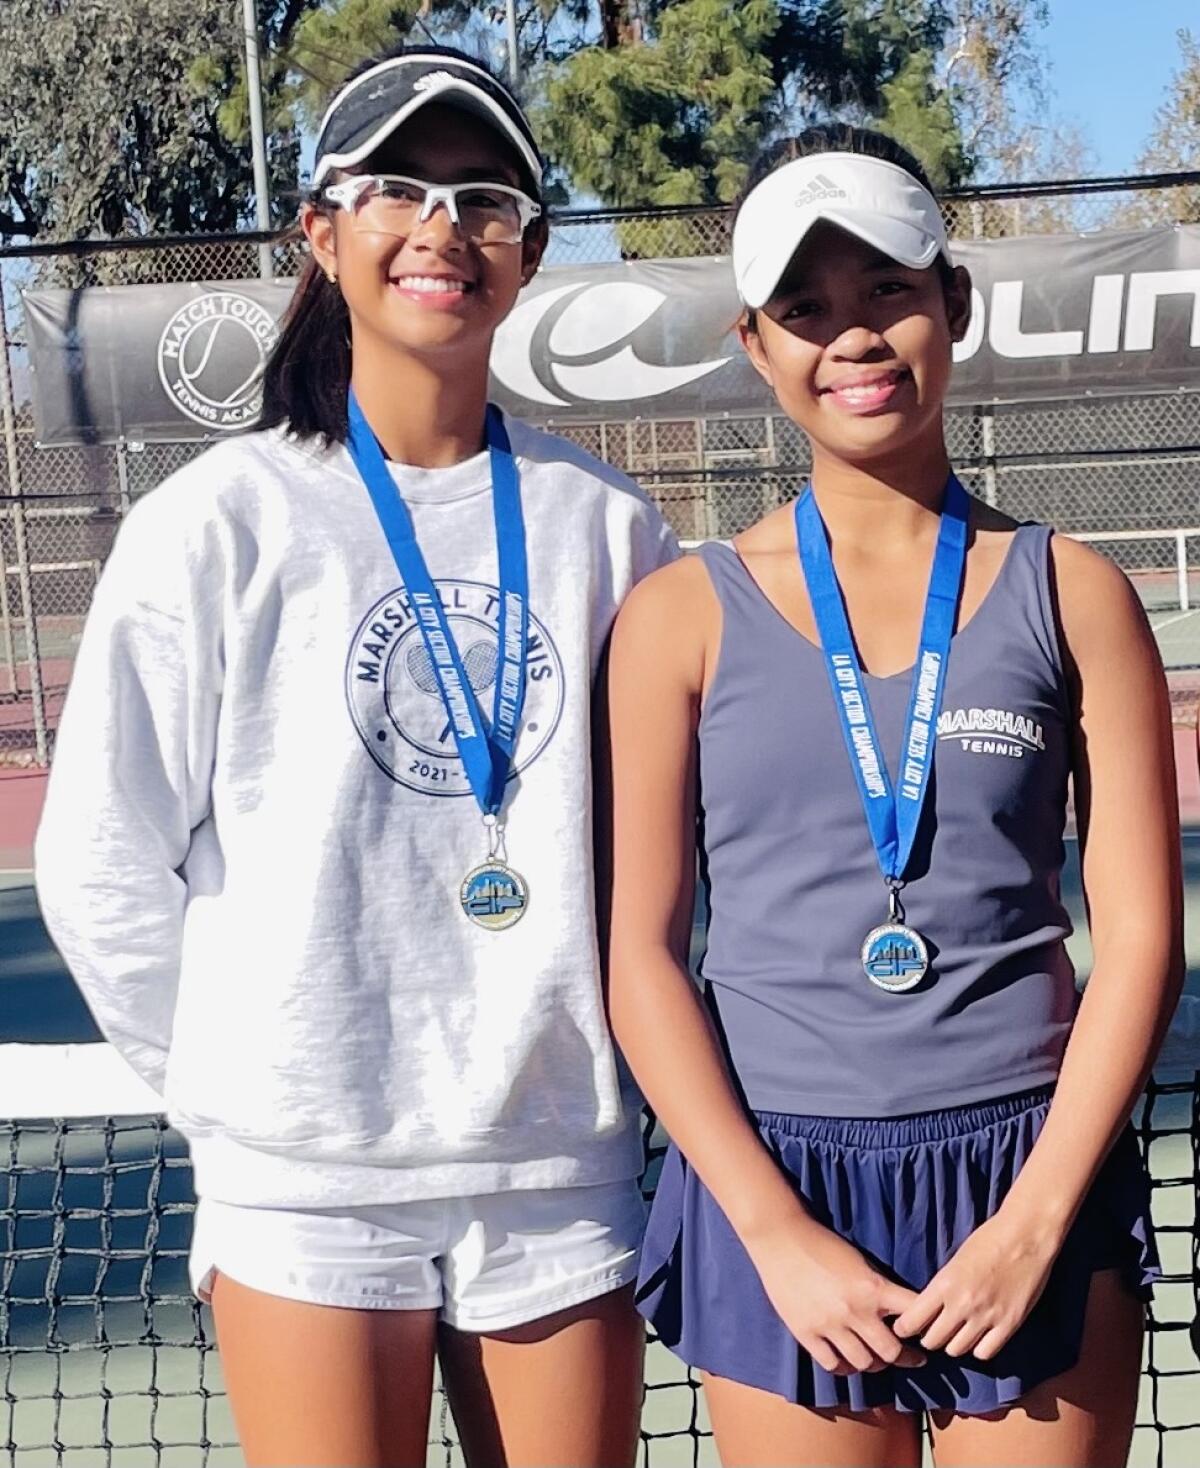 Marshall High sisters Johanna (left) and Julianna Galindo pose for a photo on a tennis court.